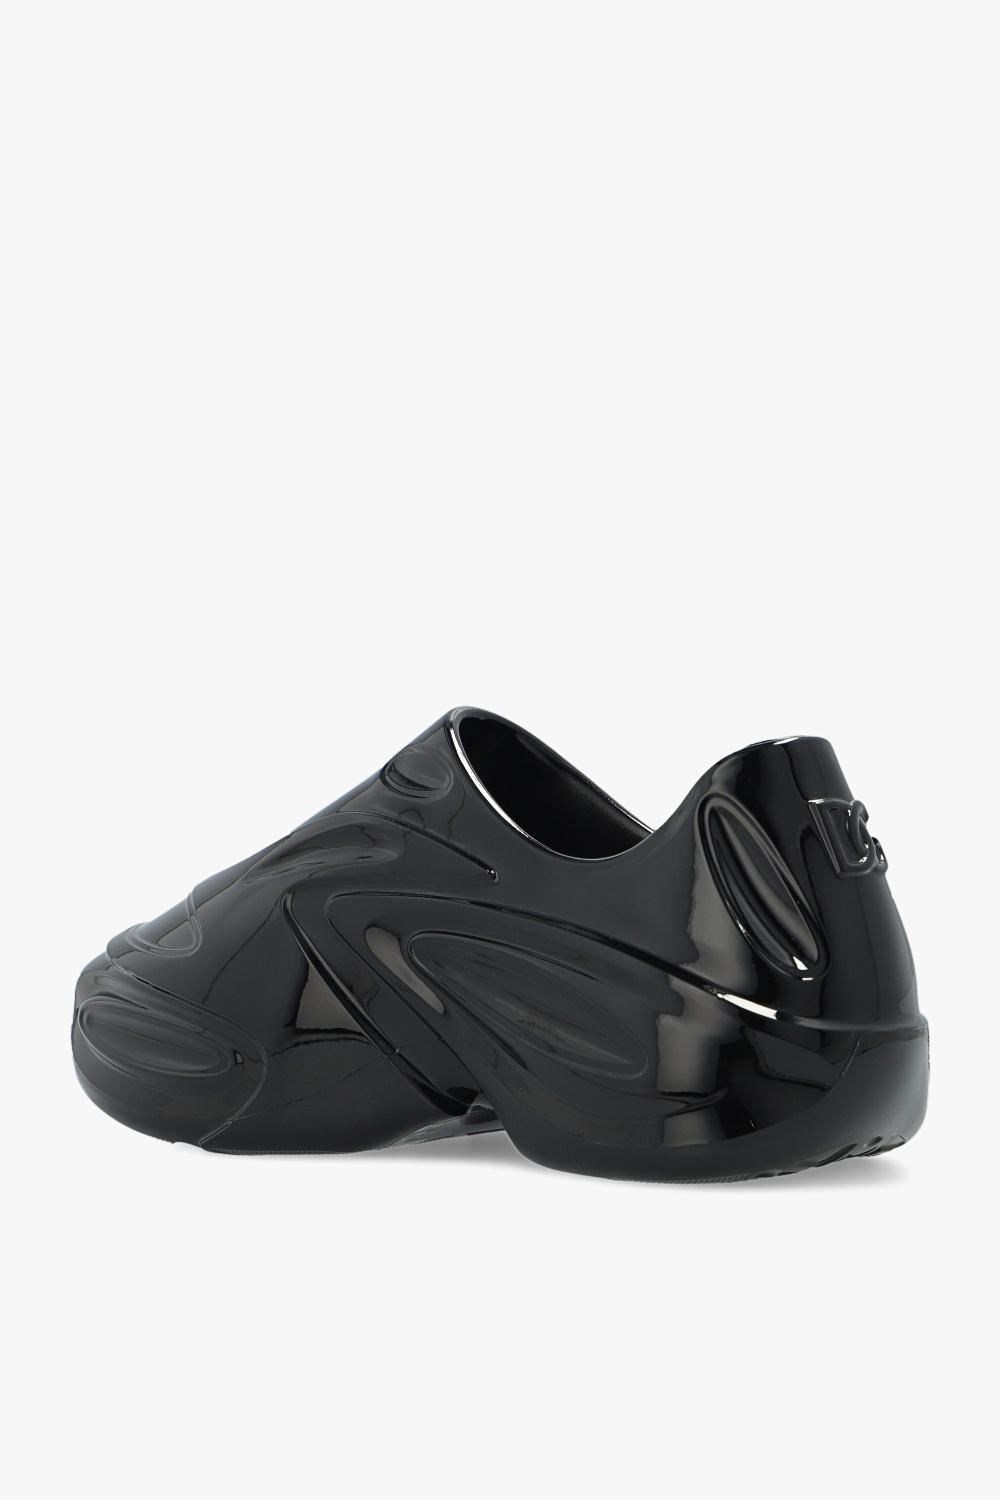 dolce Kids & Gabbana ‘Toy’ rubber sneakers